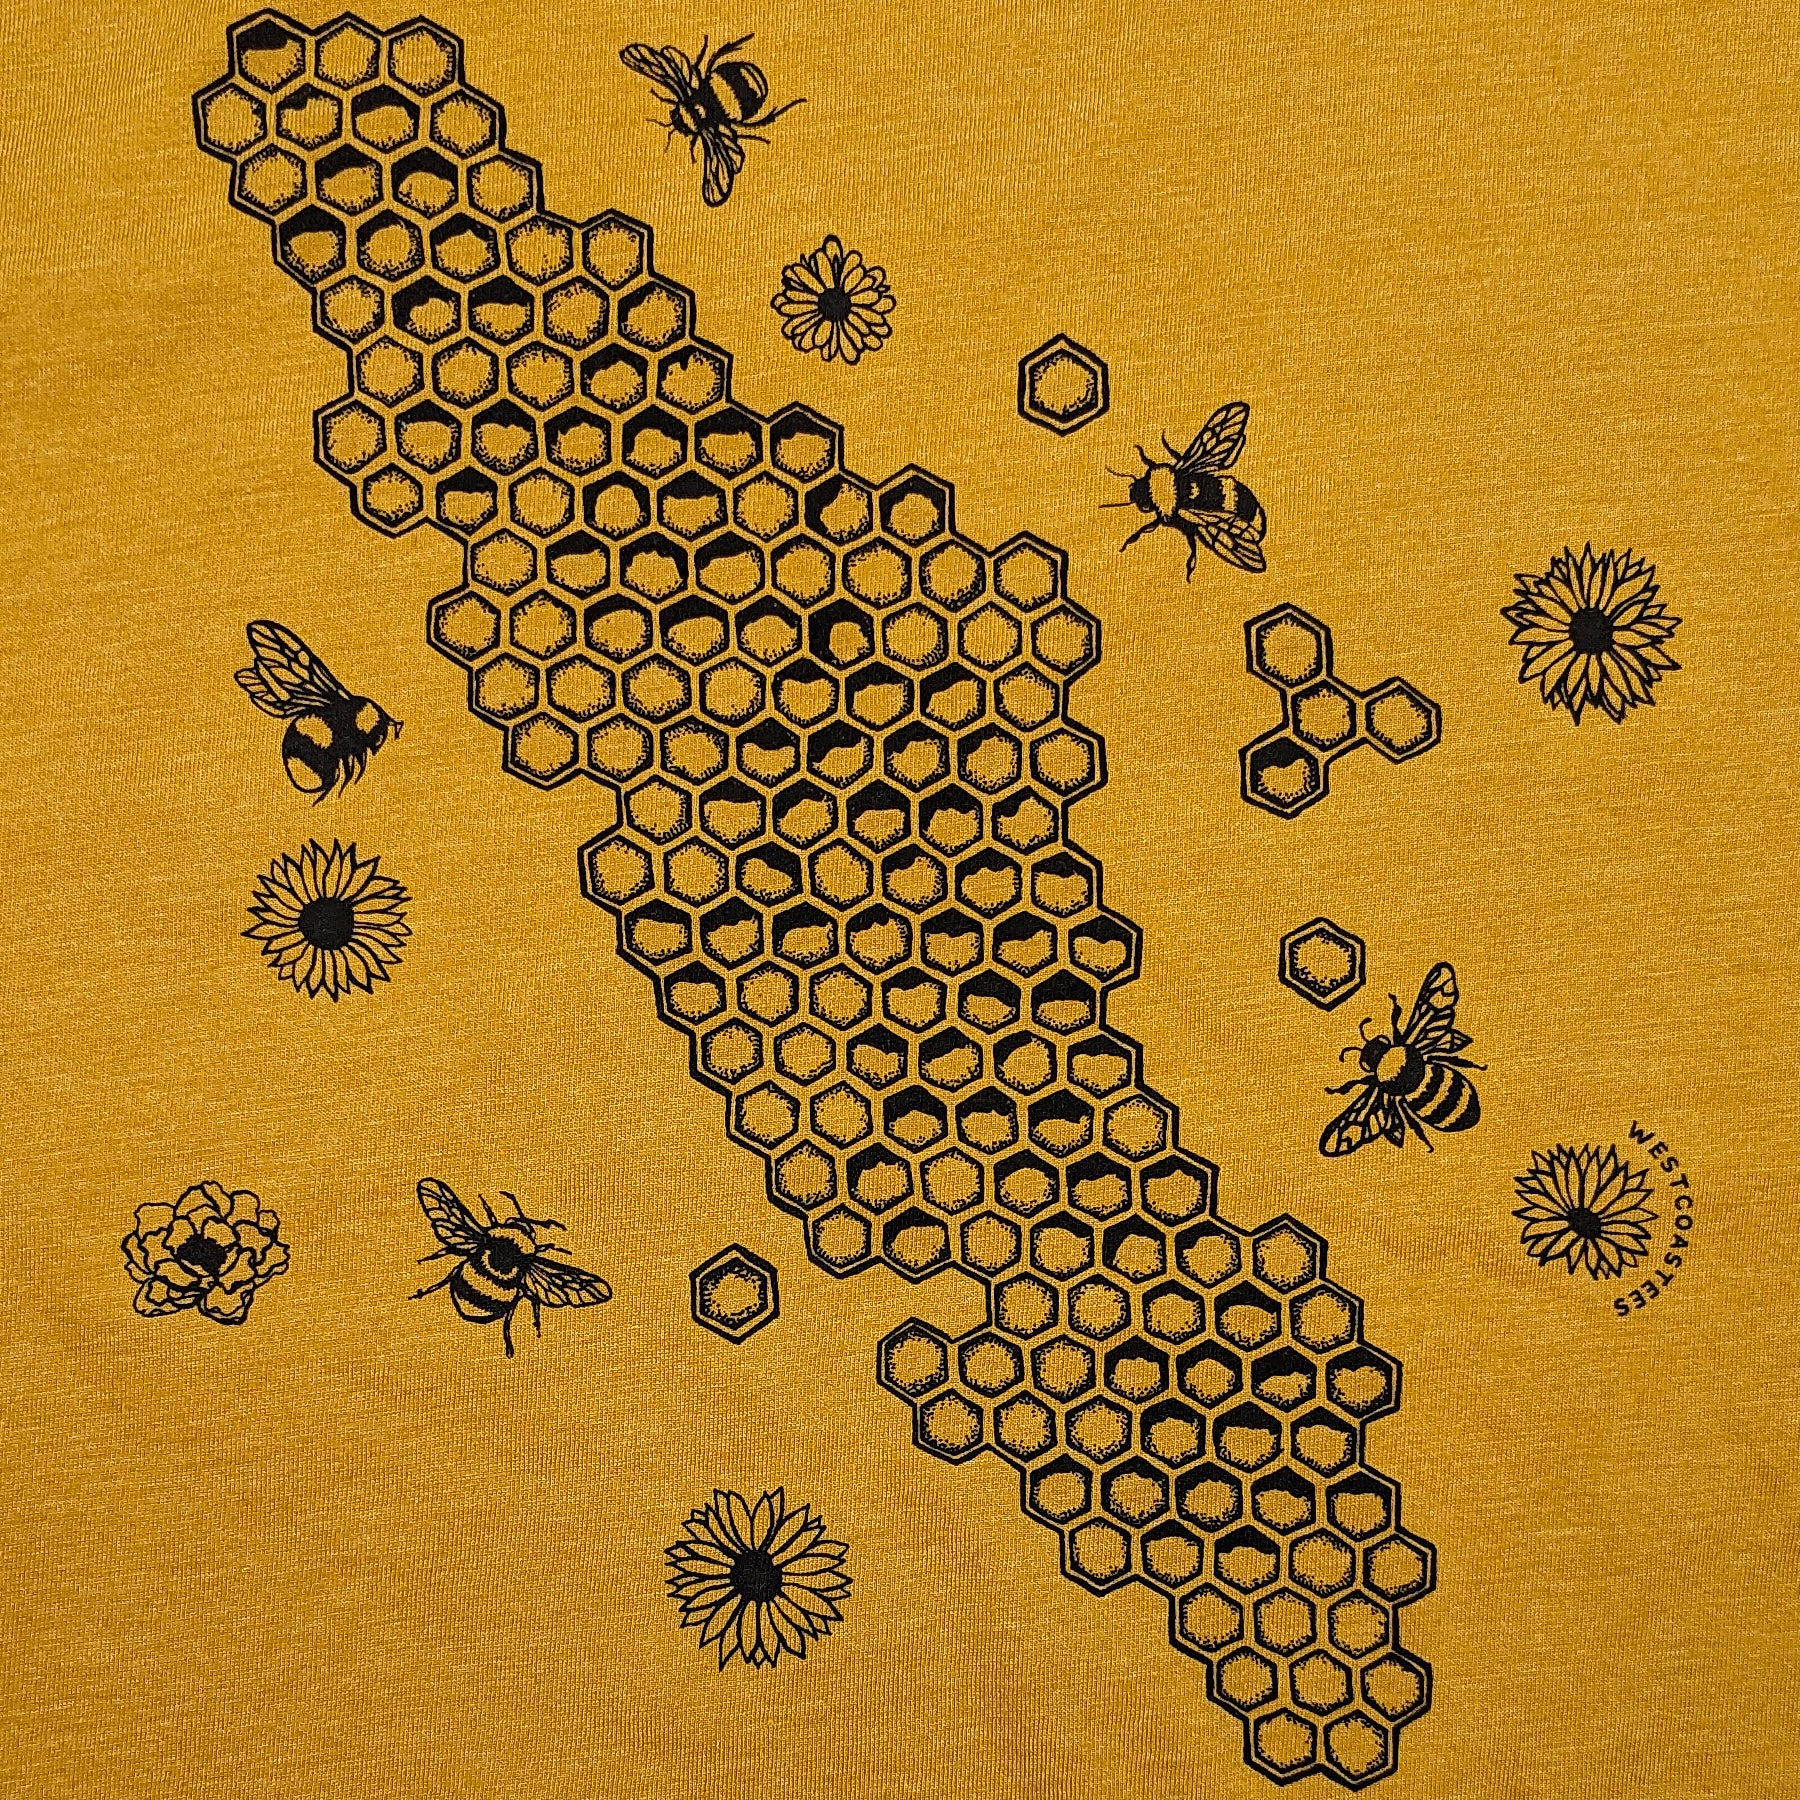 Women's Honeycomb Island Crew Neck T-shirt